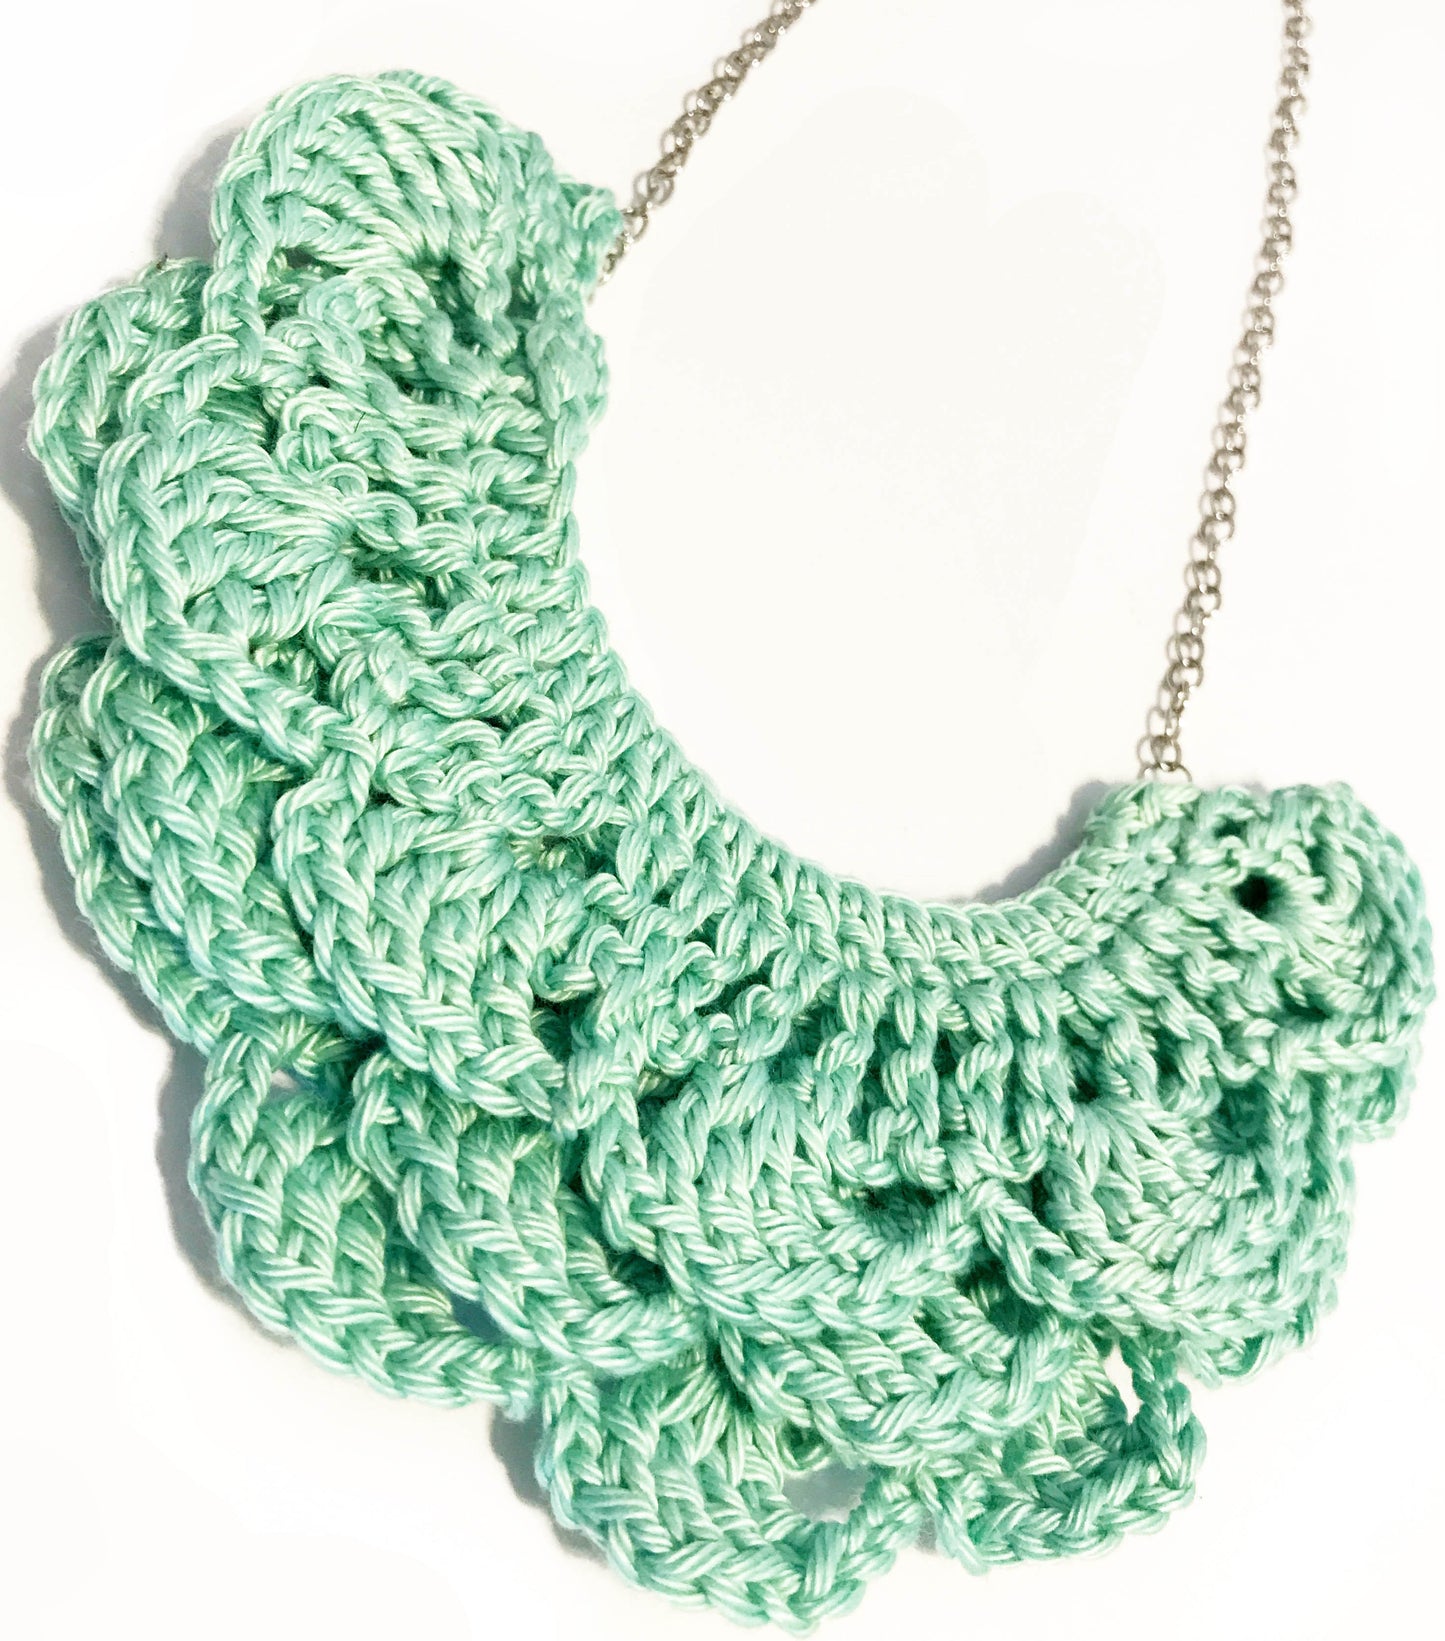 Crochet Bib Necklace - Crochet Layered Necklace